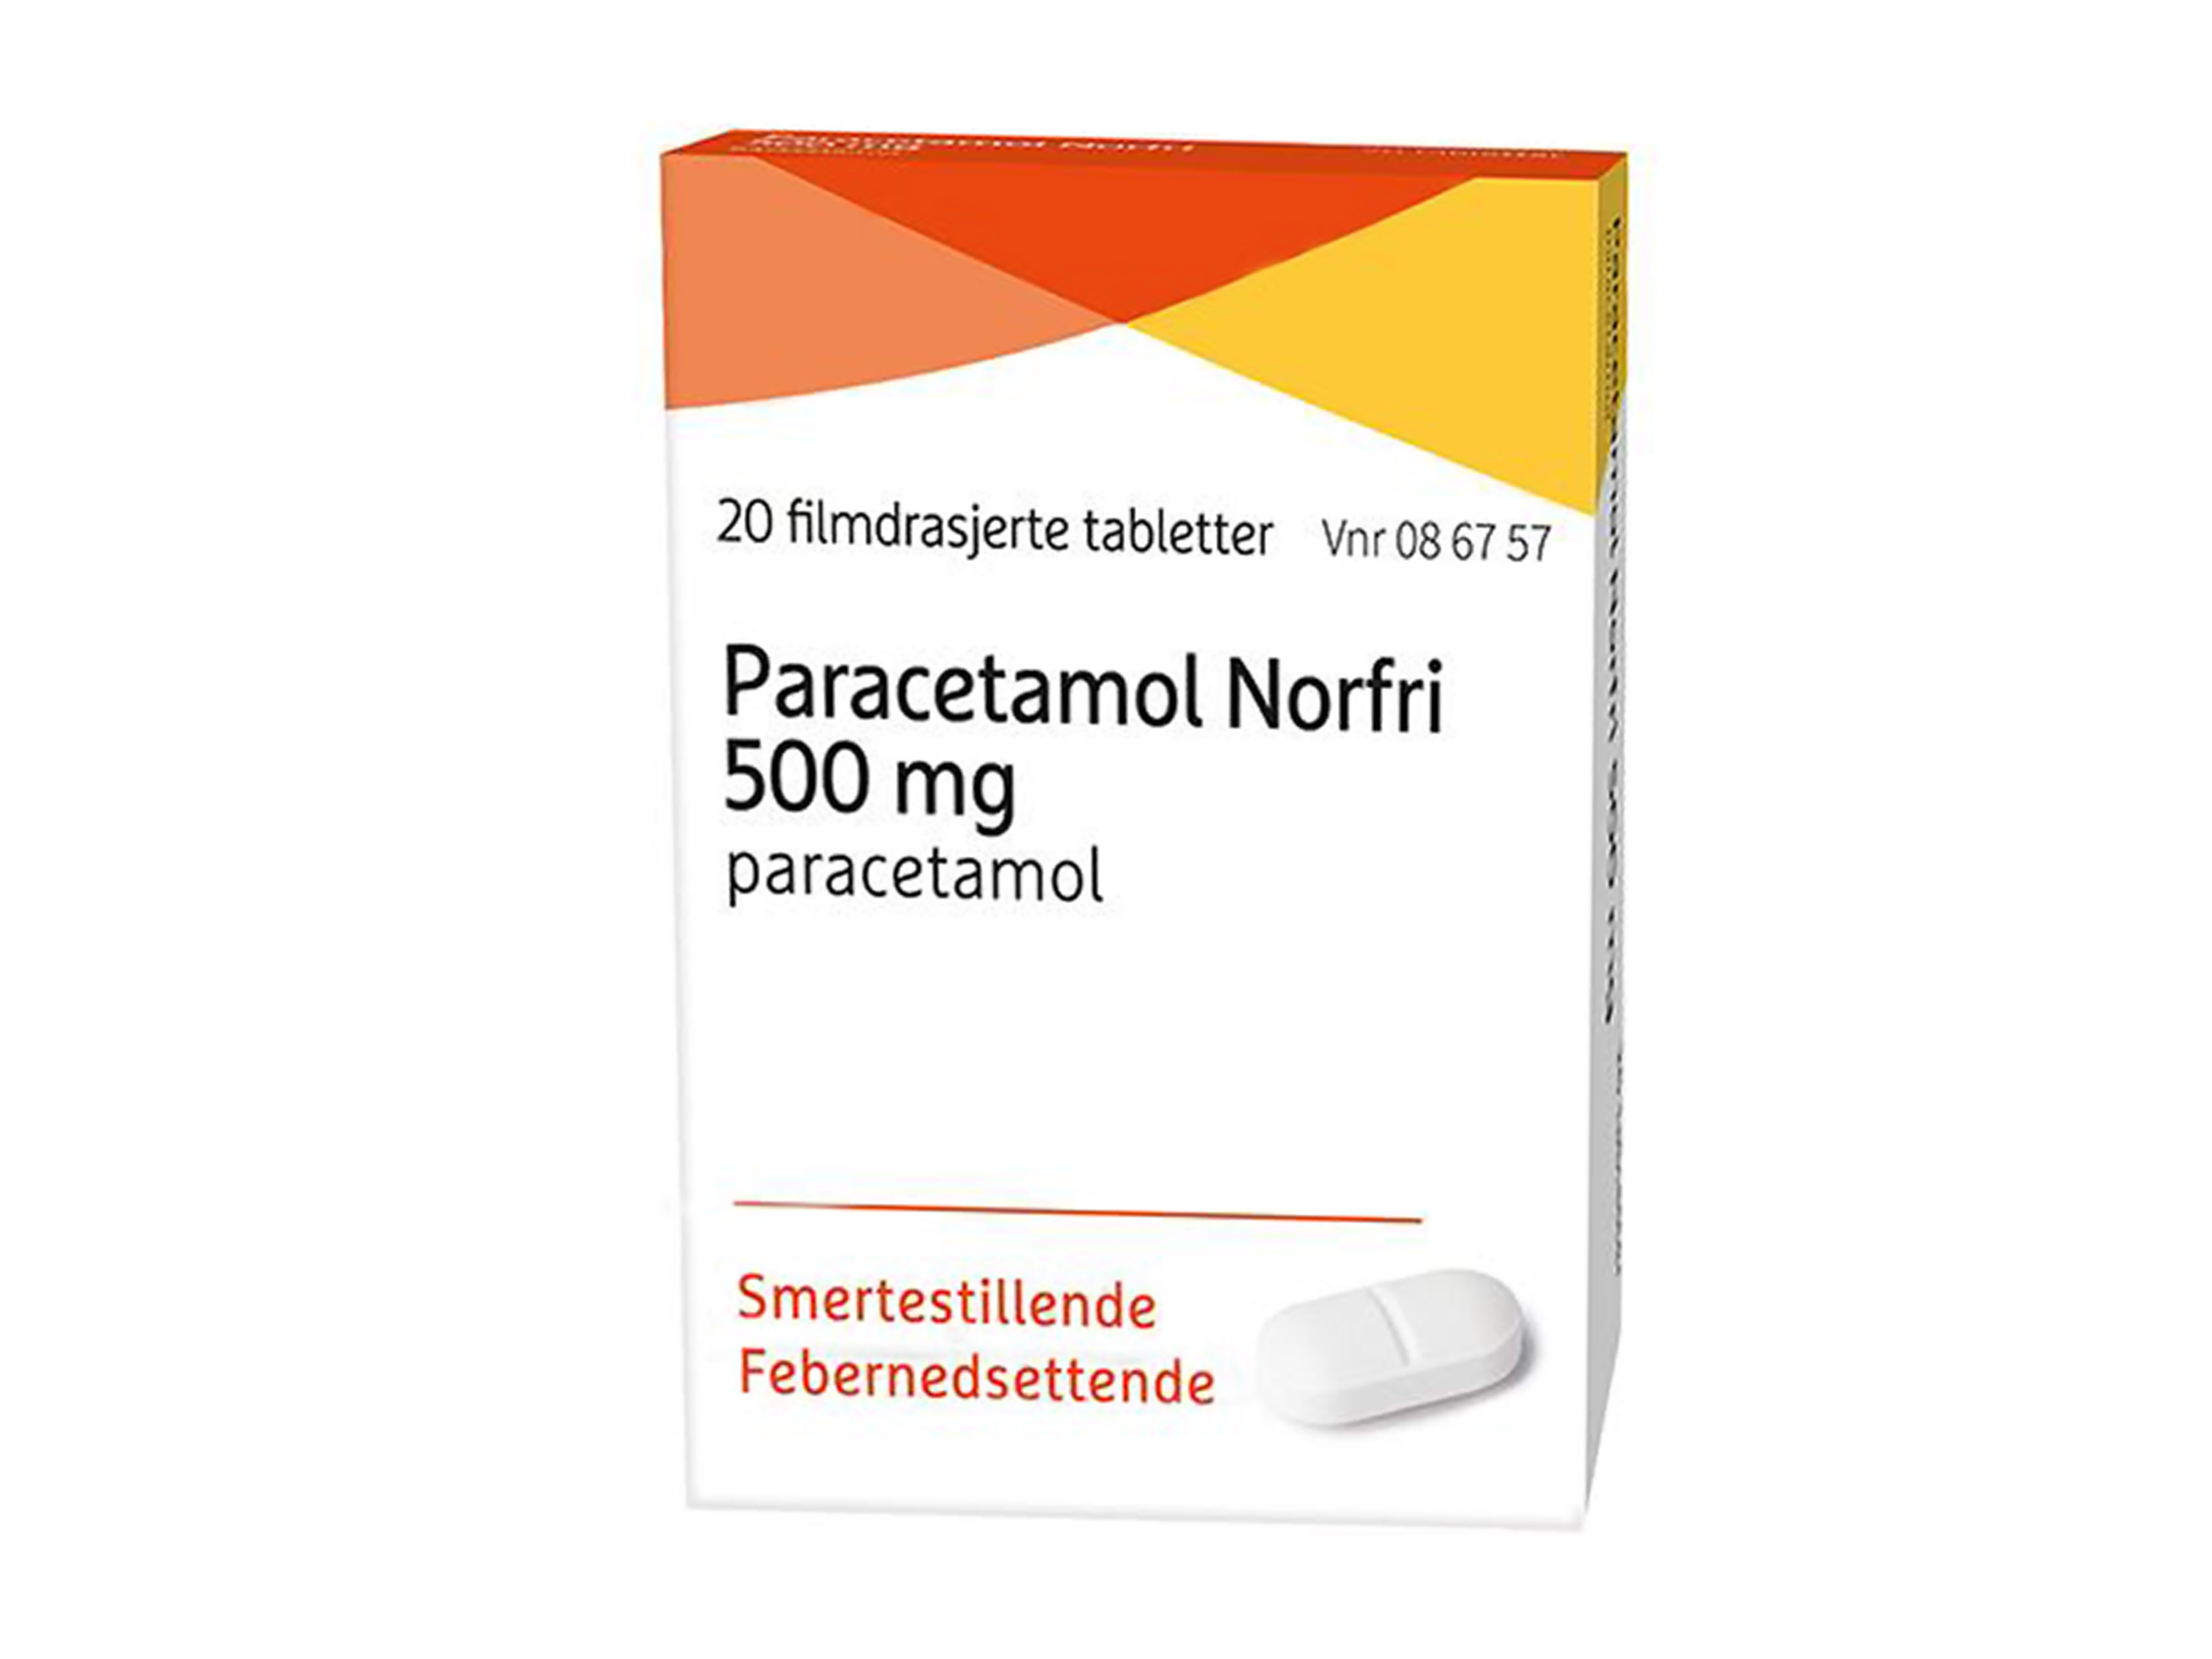 Paracetamol Norfri 500 mg tabletter, 20 stk.